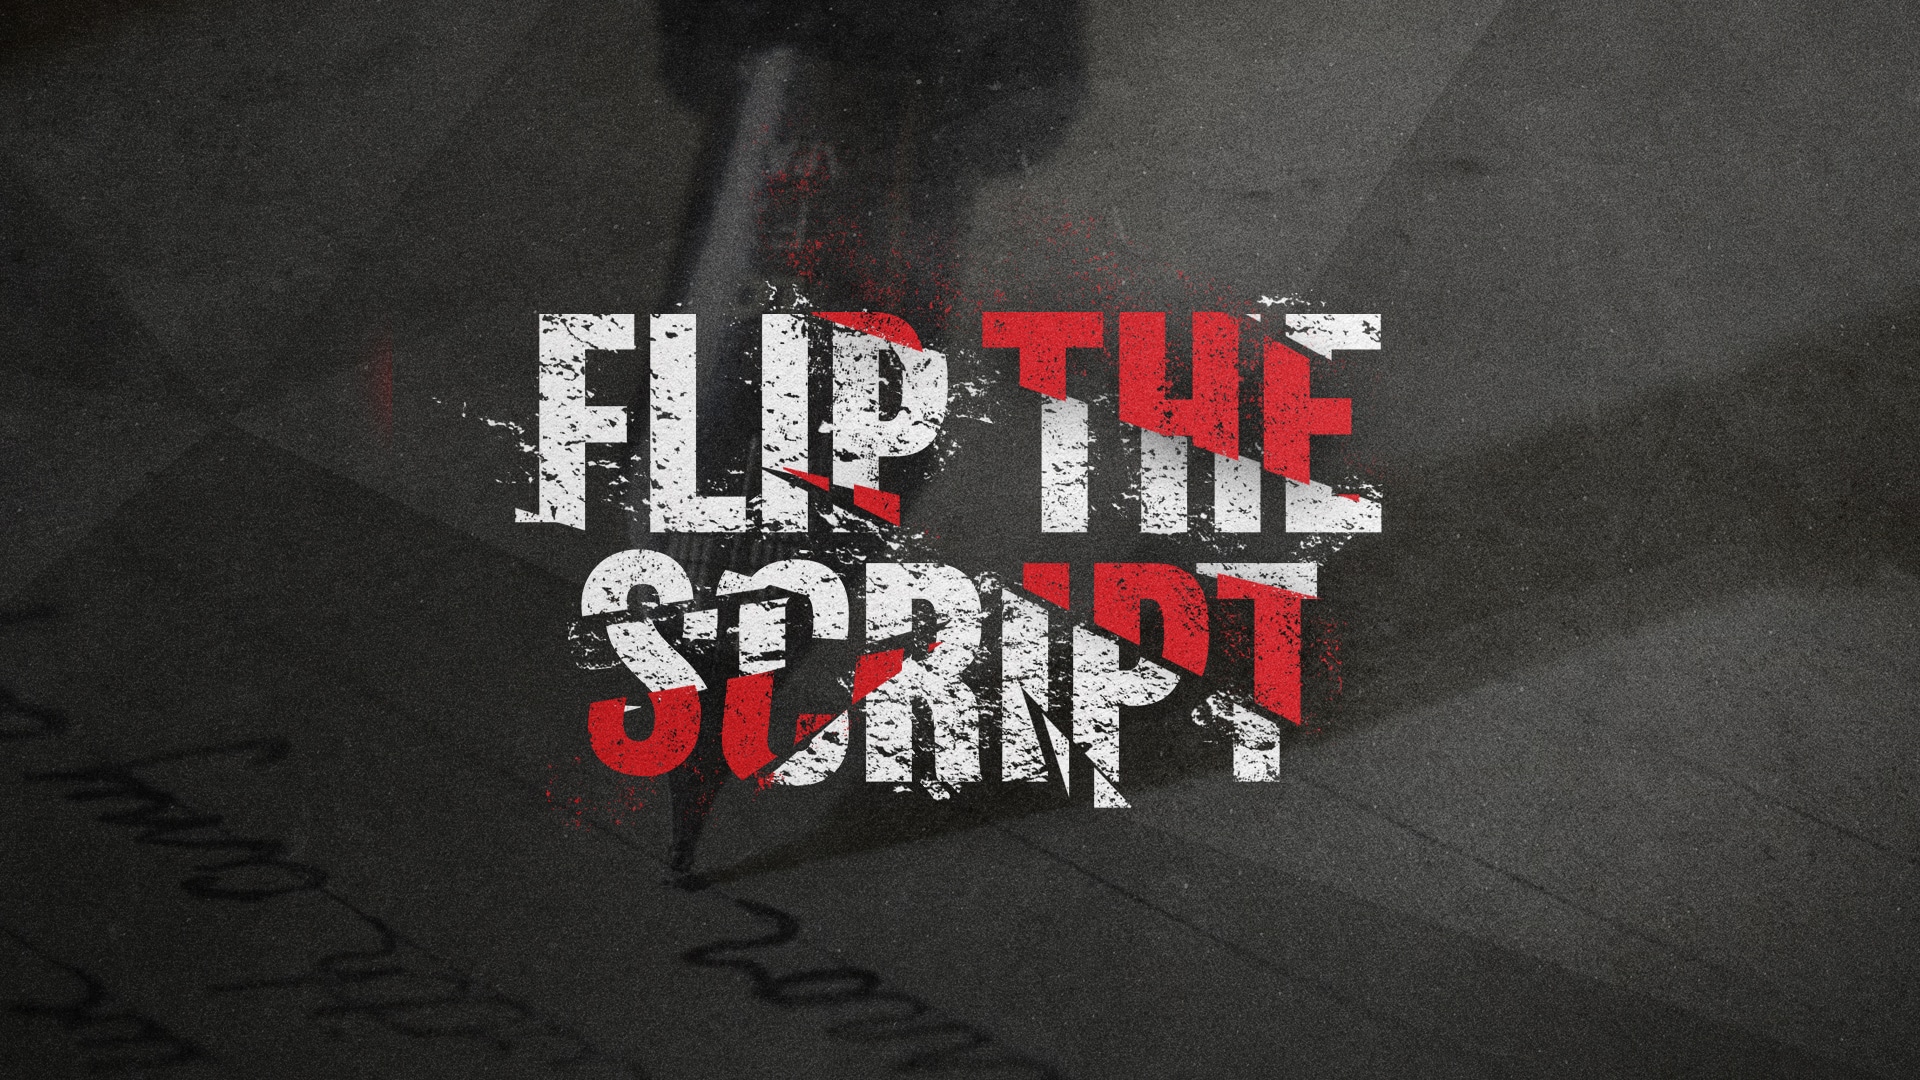 Flip The Script